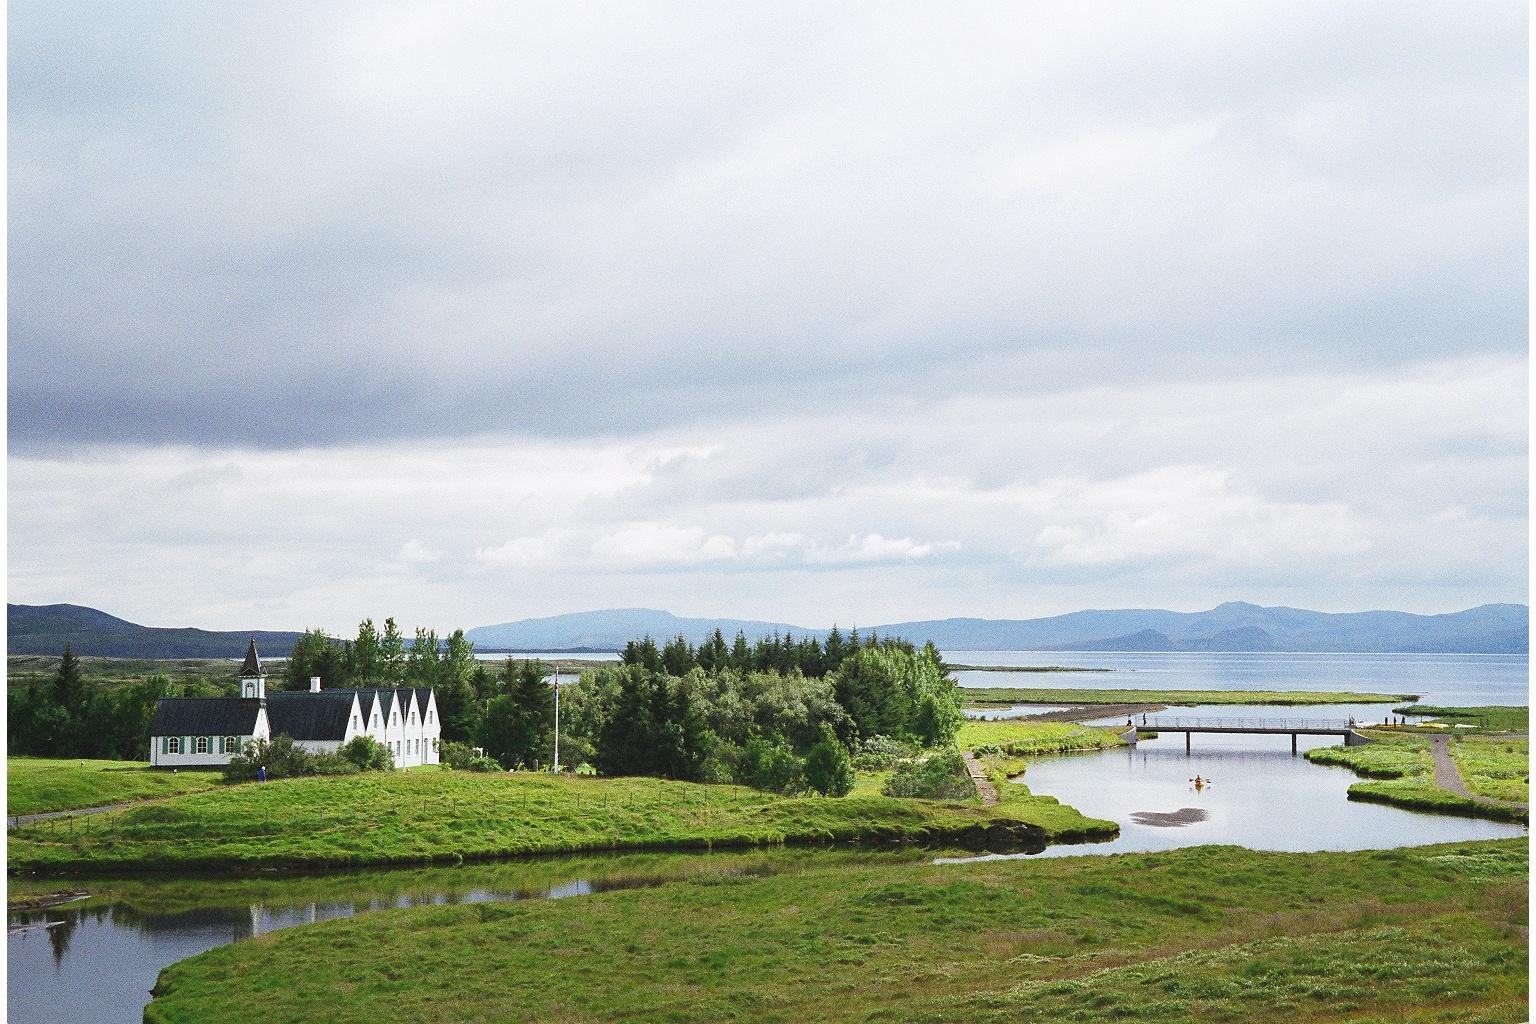 [Iceland-Parliamentary-Plains-lake-mountains-houses-church-canoe-1-BG.jpg]